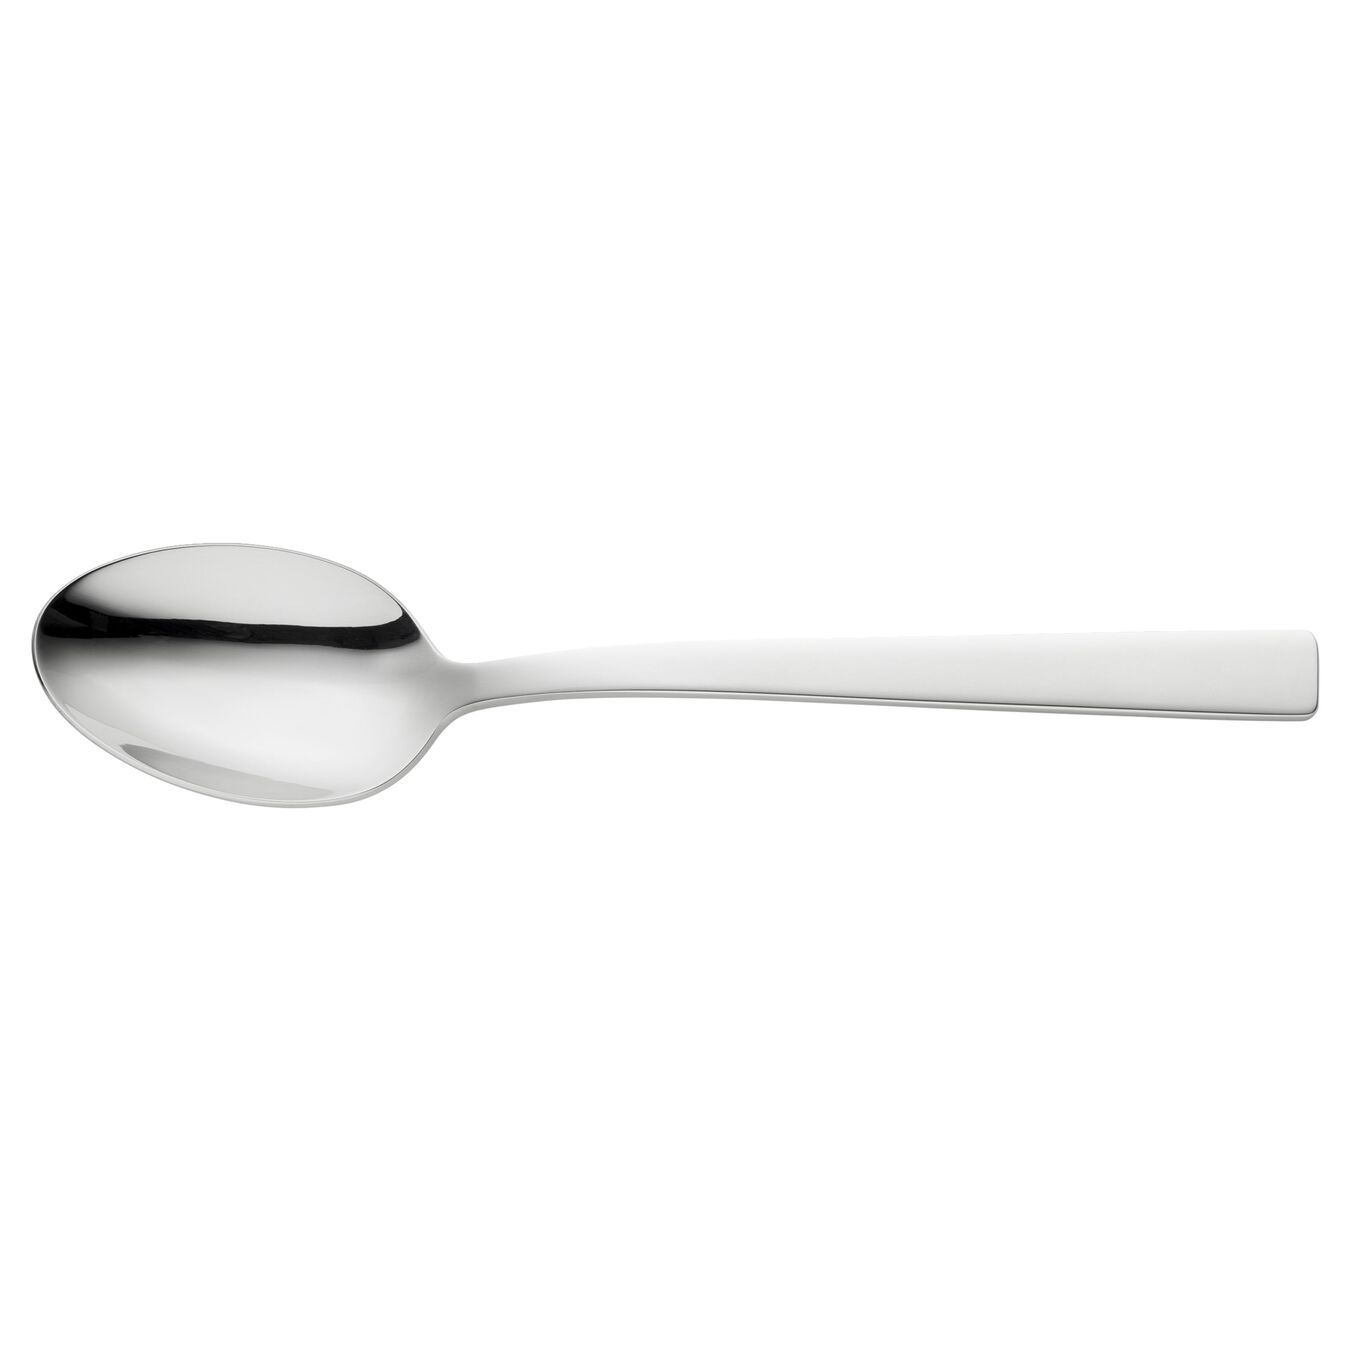 Dinner spoon, no-color | polished | 20 cm,,large 1